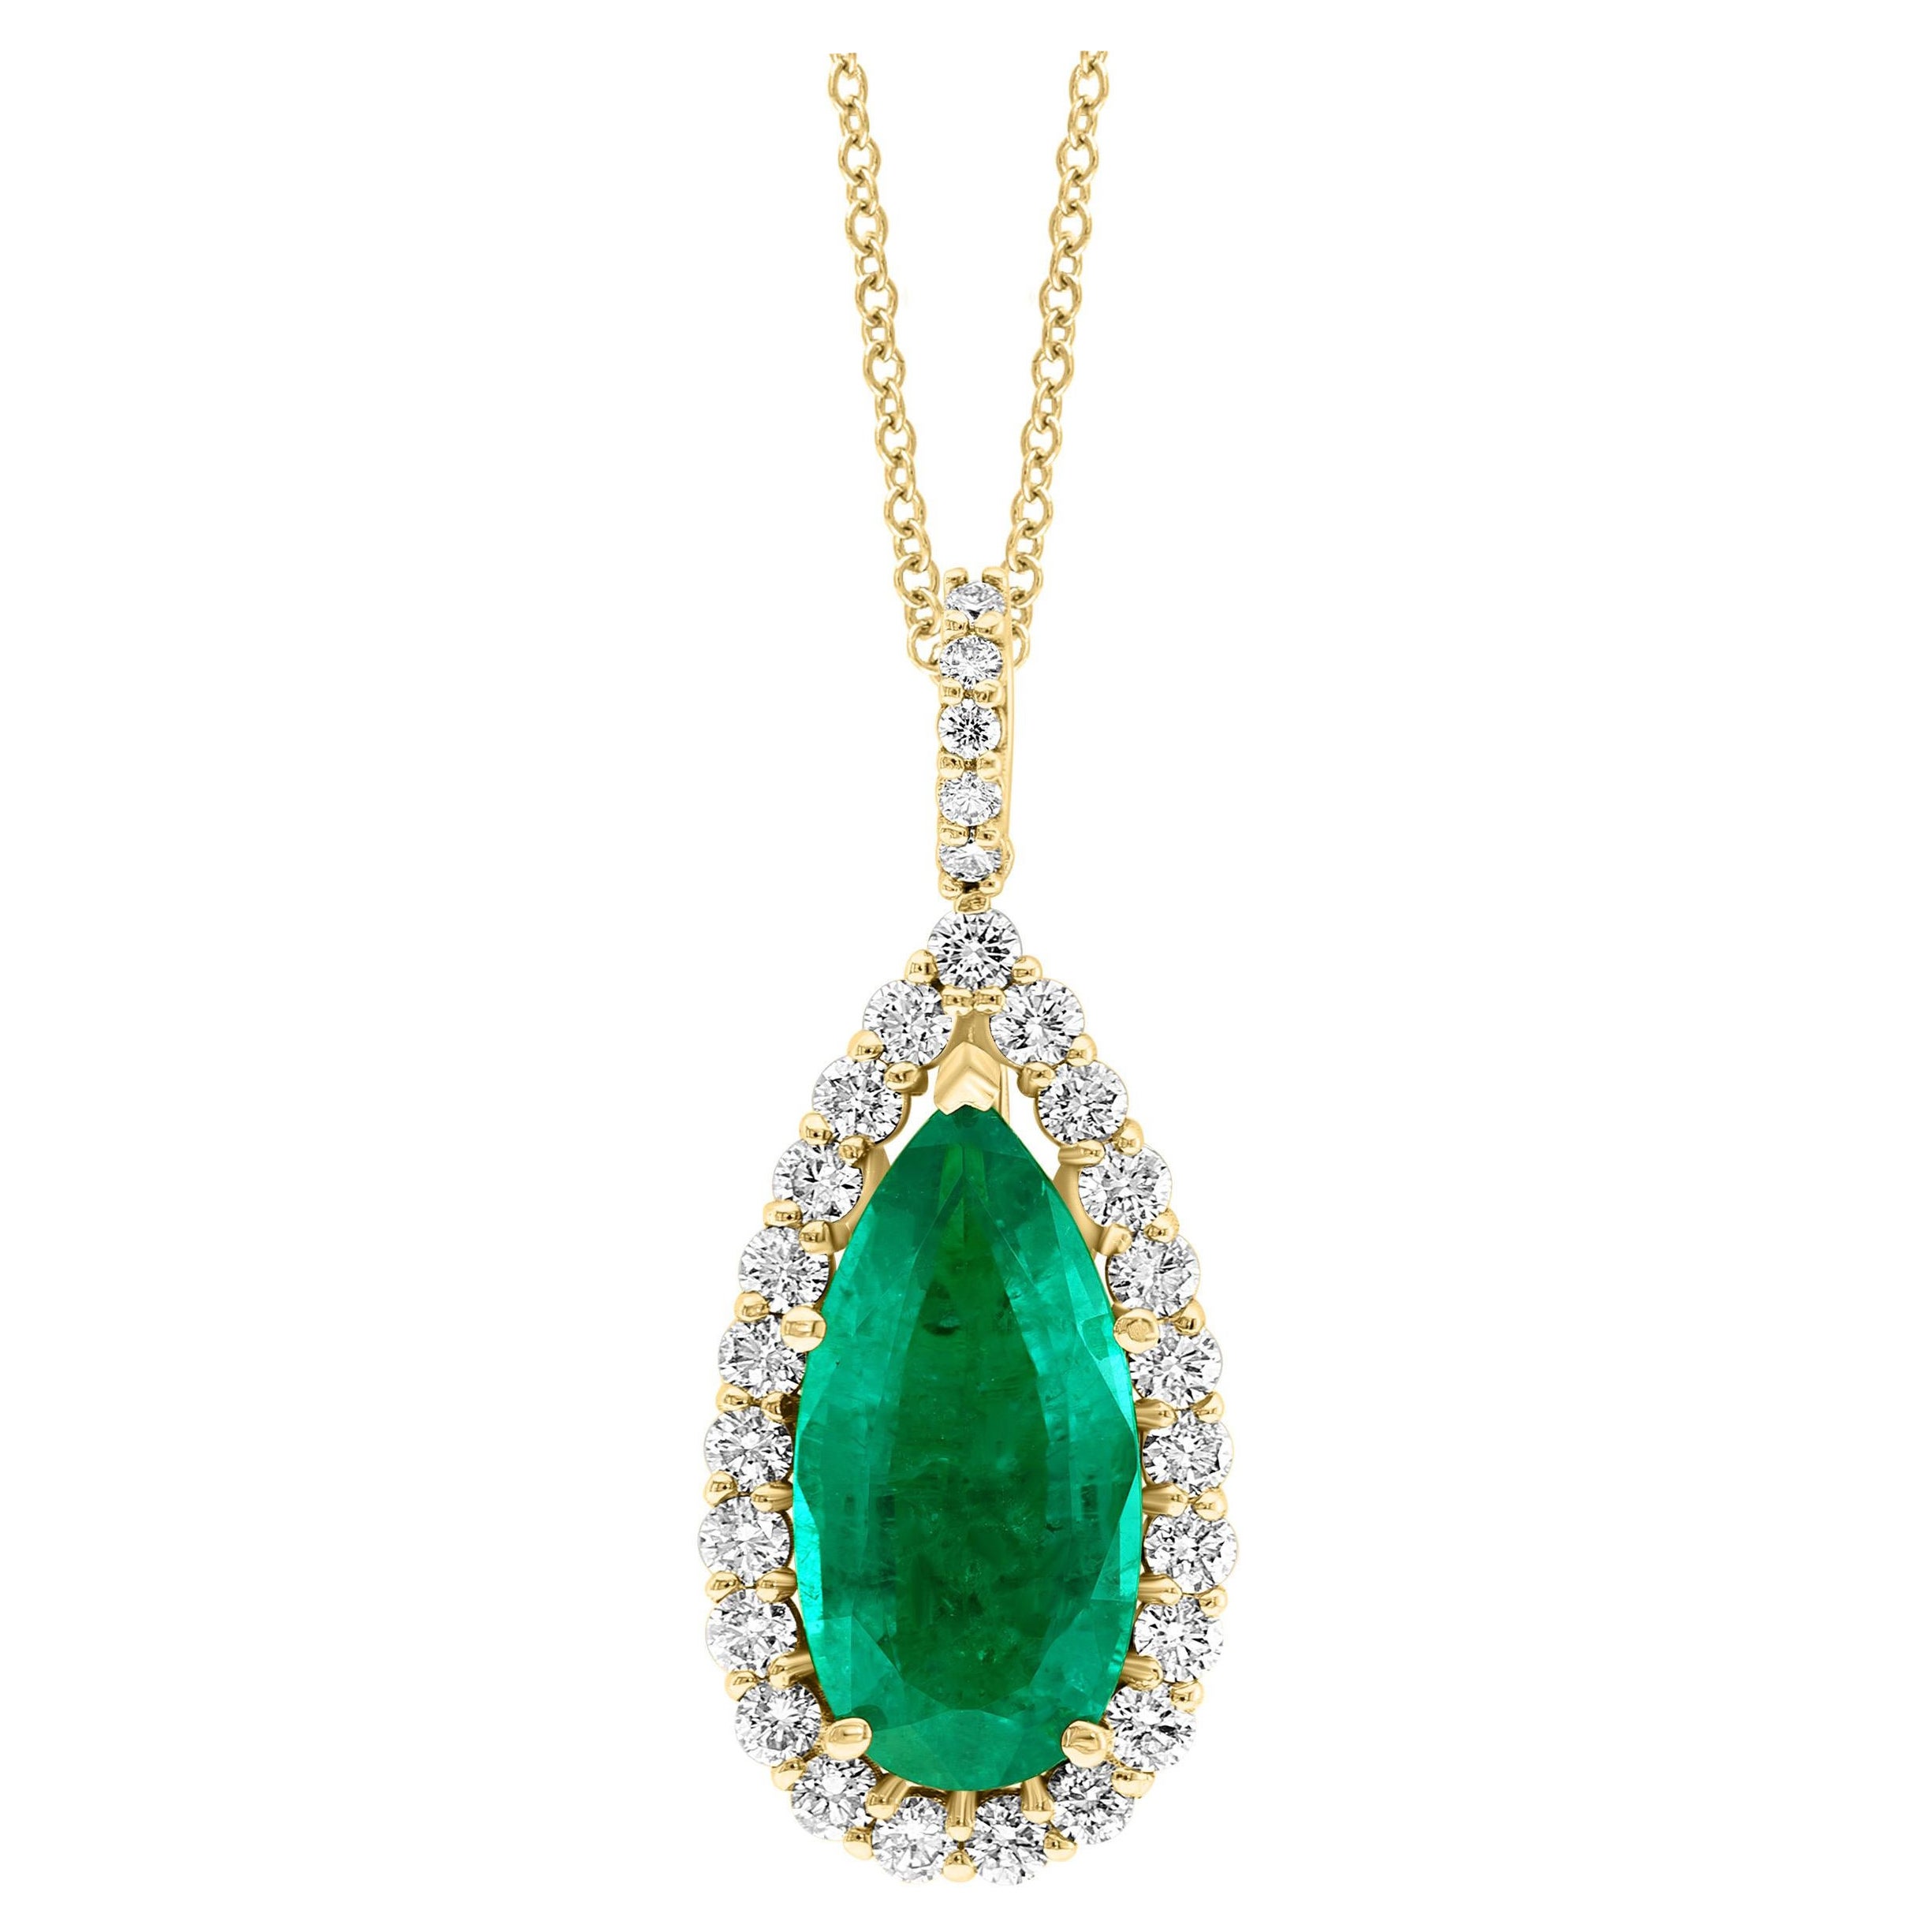 11 Carat Pear Shape Colombian Emerald and Diamond Pendant Necklace Enhancer For Sale